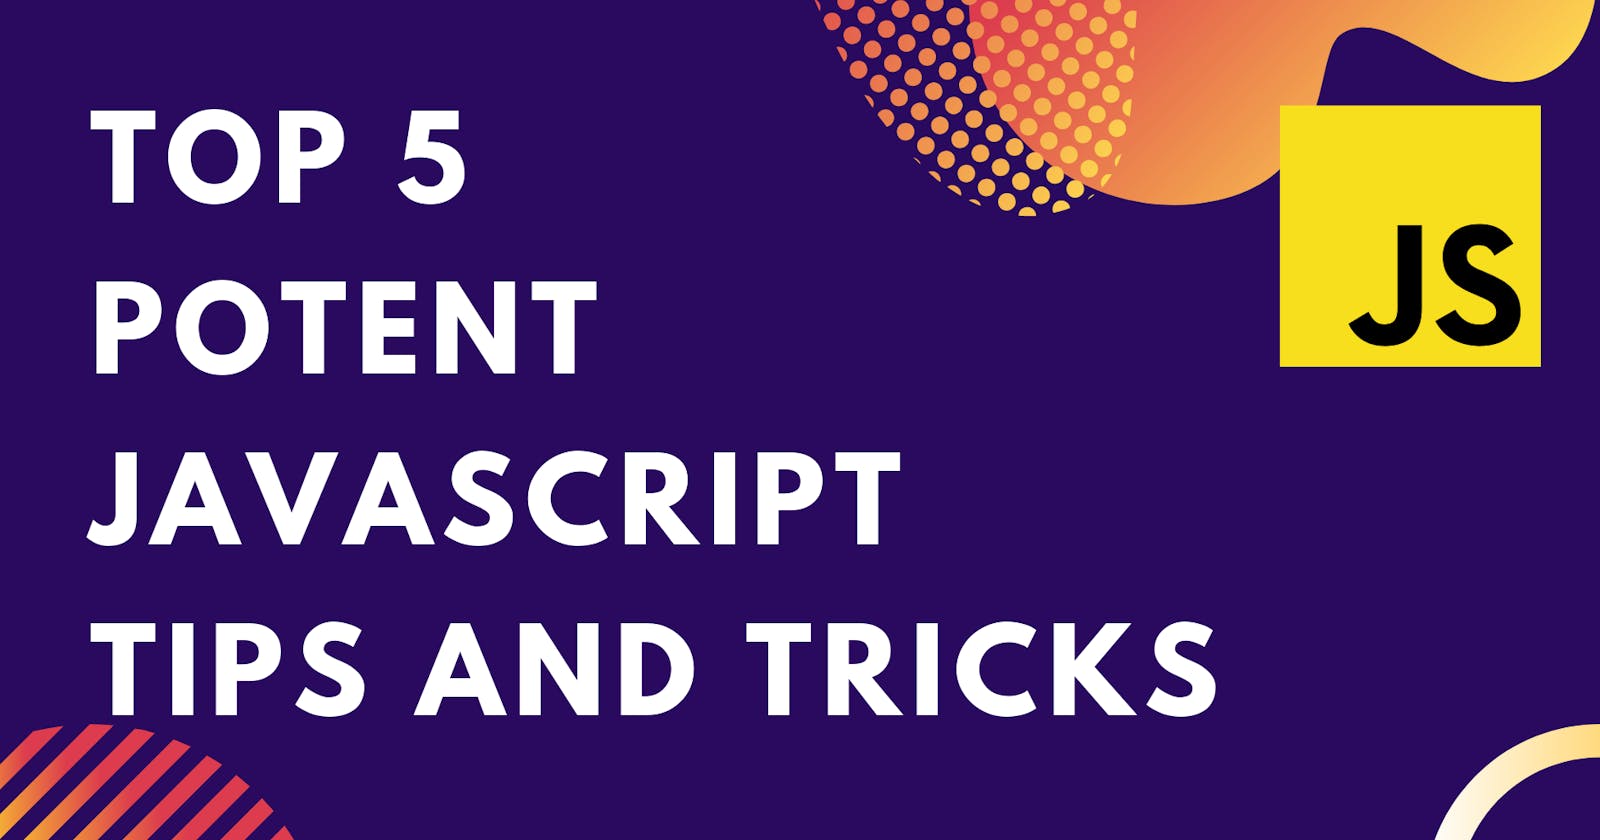 Top 5 Potent Javascript Tips and Tricks